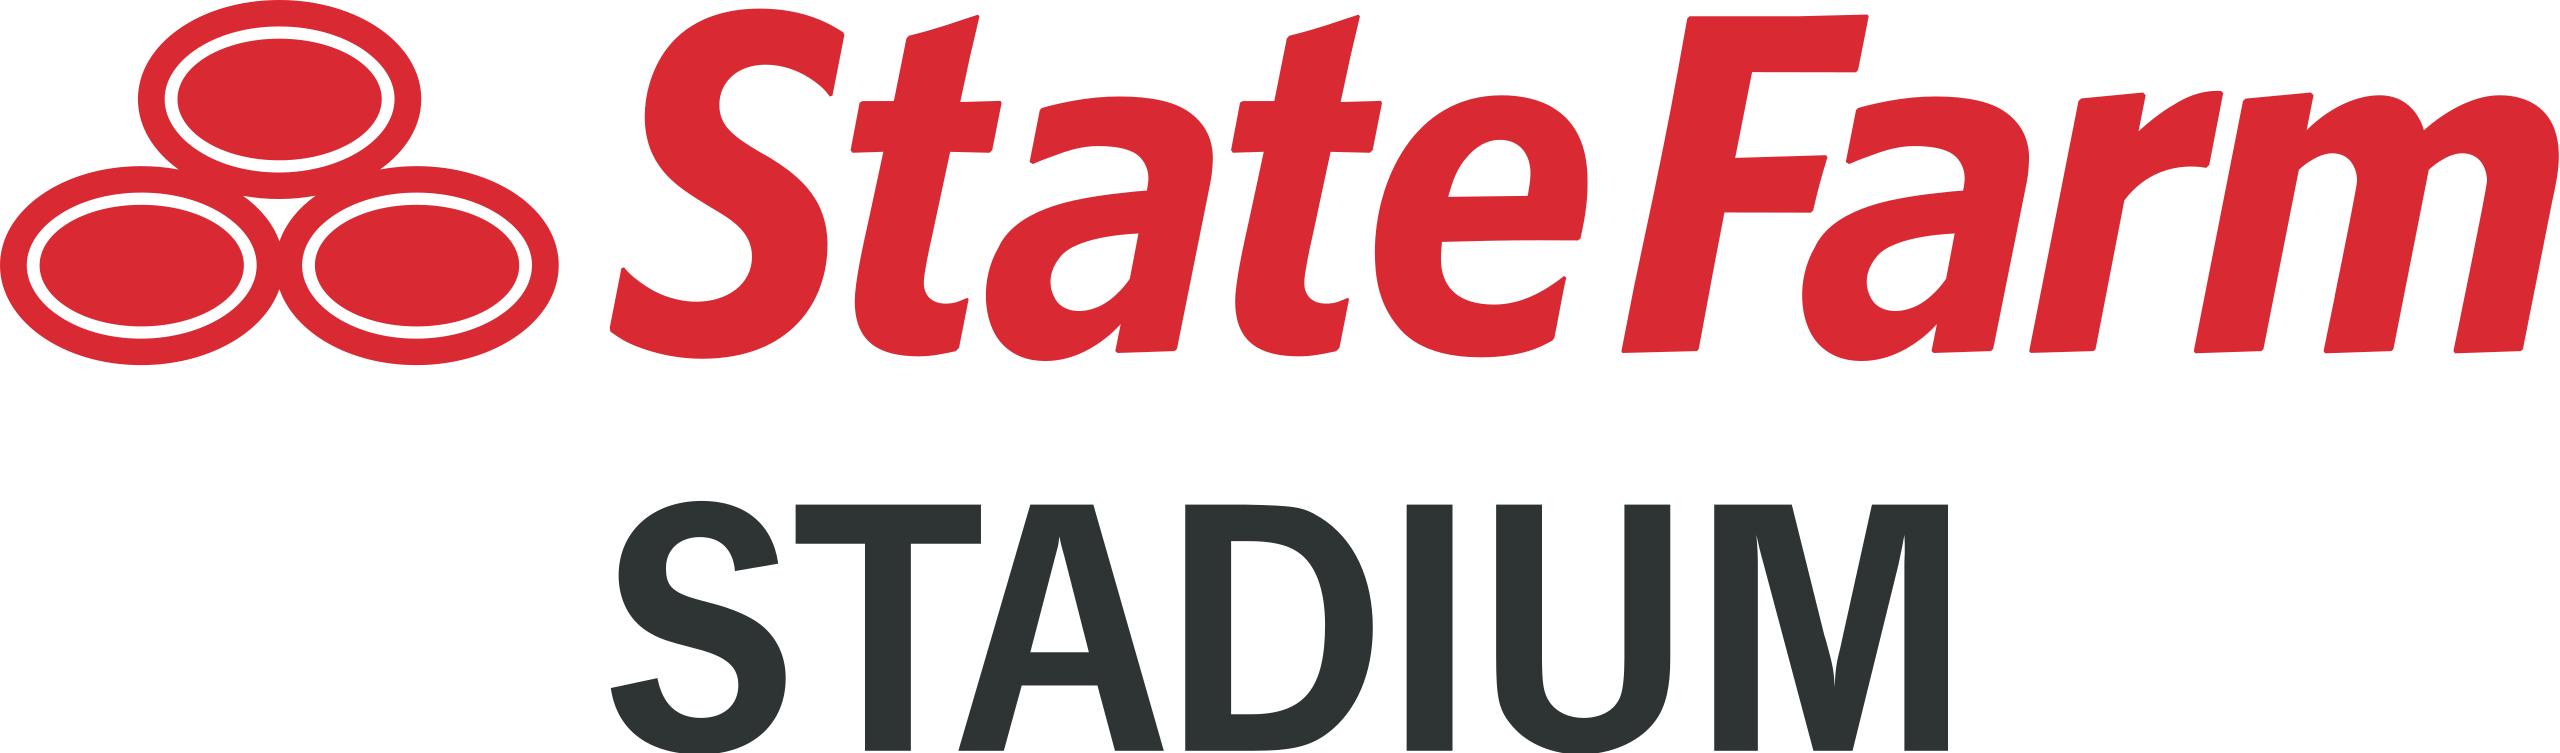 State_Farm_Stadium_logo.svg